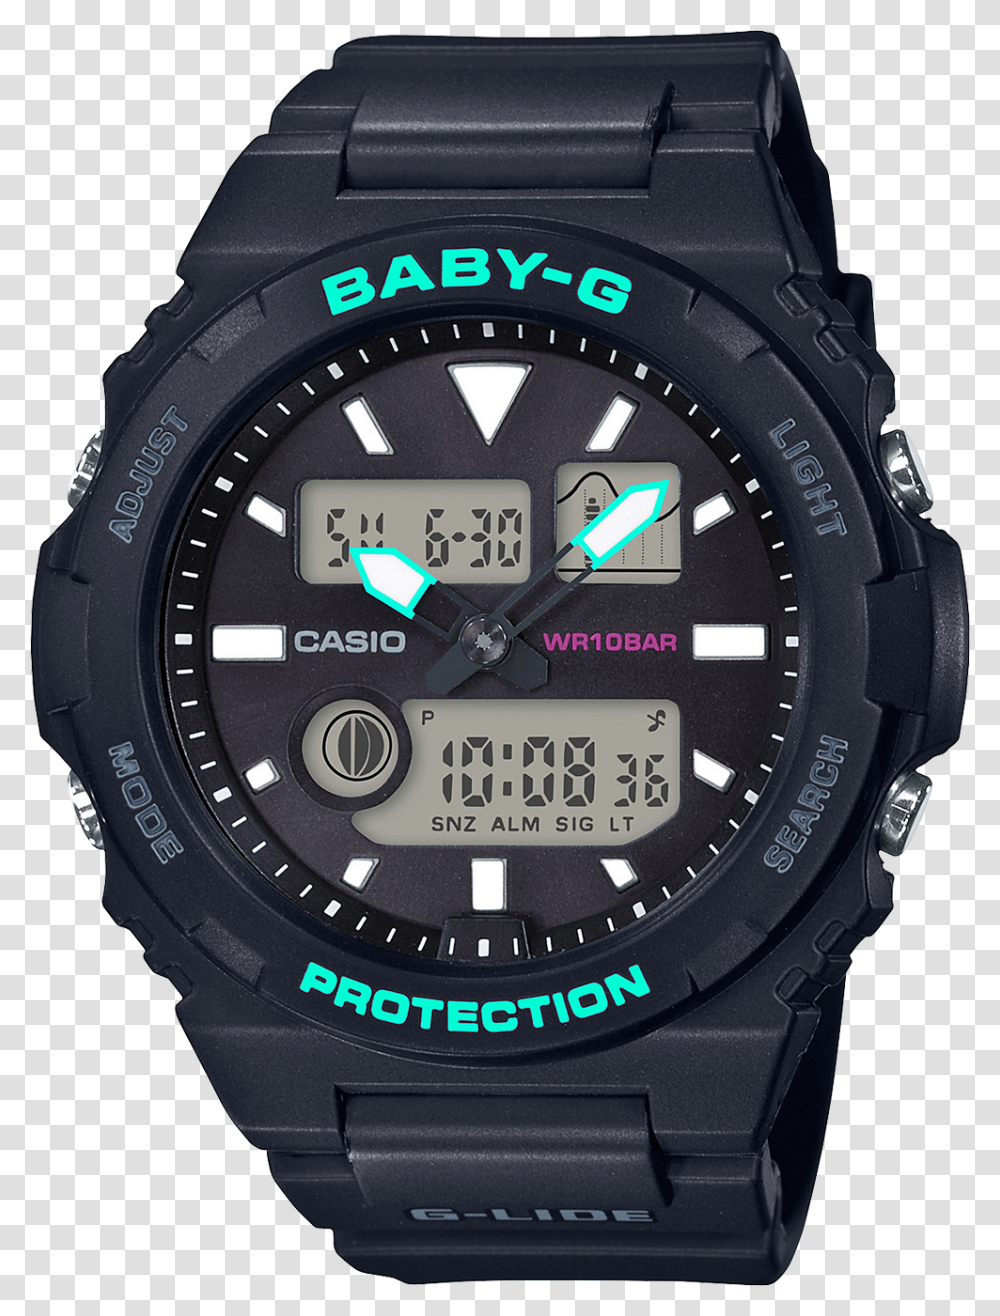 Casio Baby G Bax 100 1aer Bax100, Wristwatch, Digital Watch Transparent Png